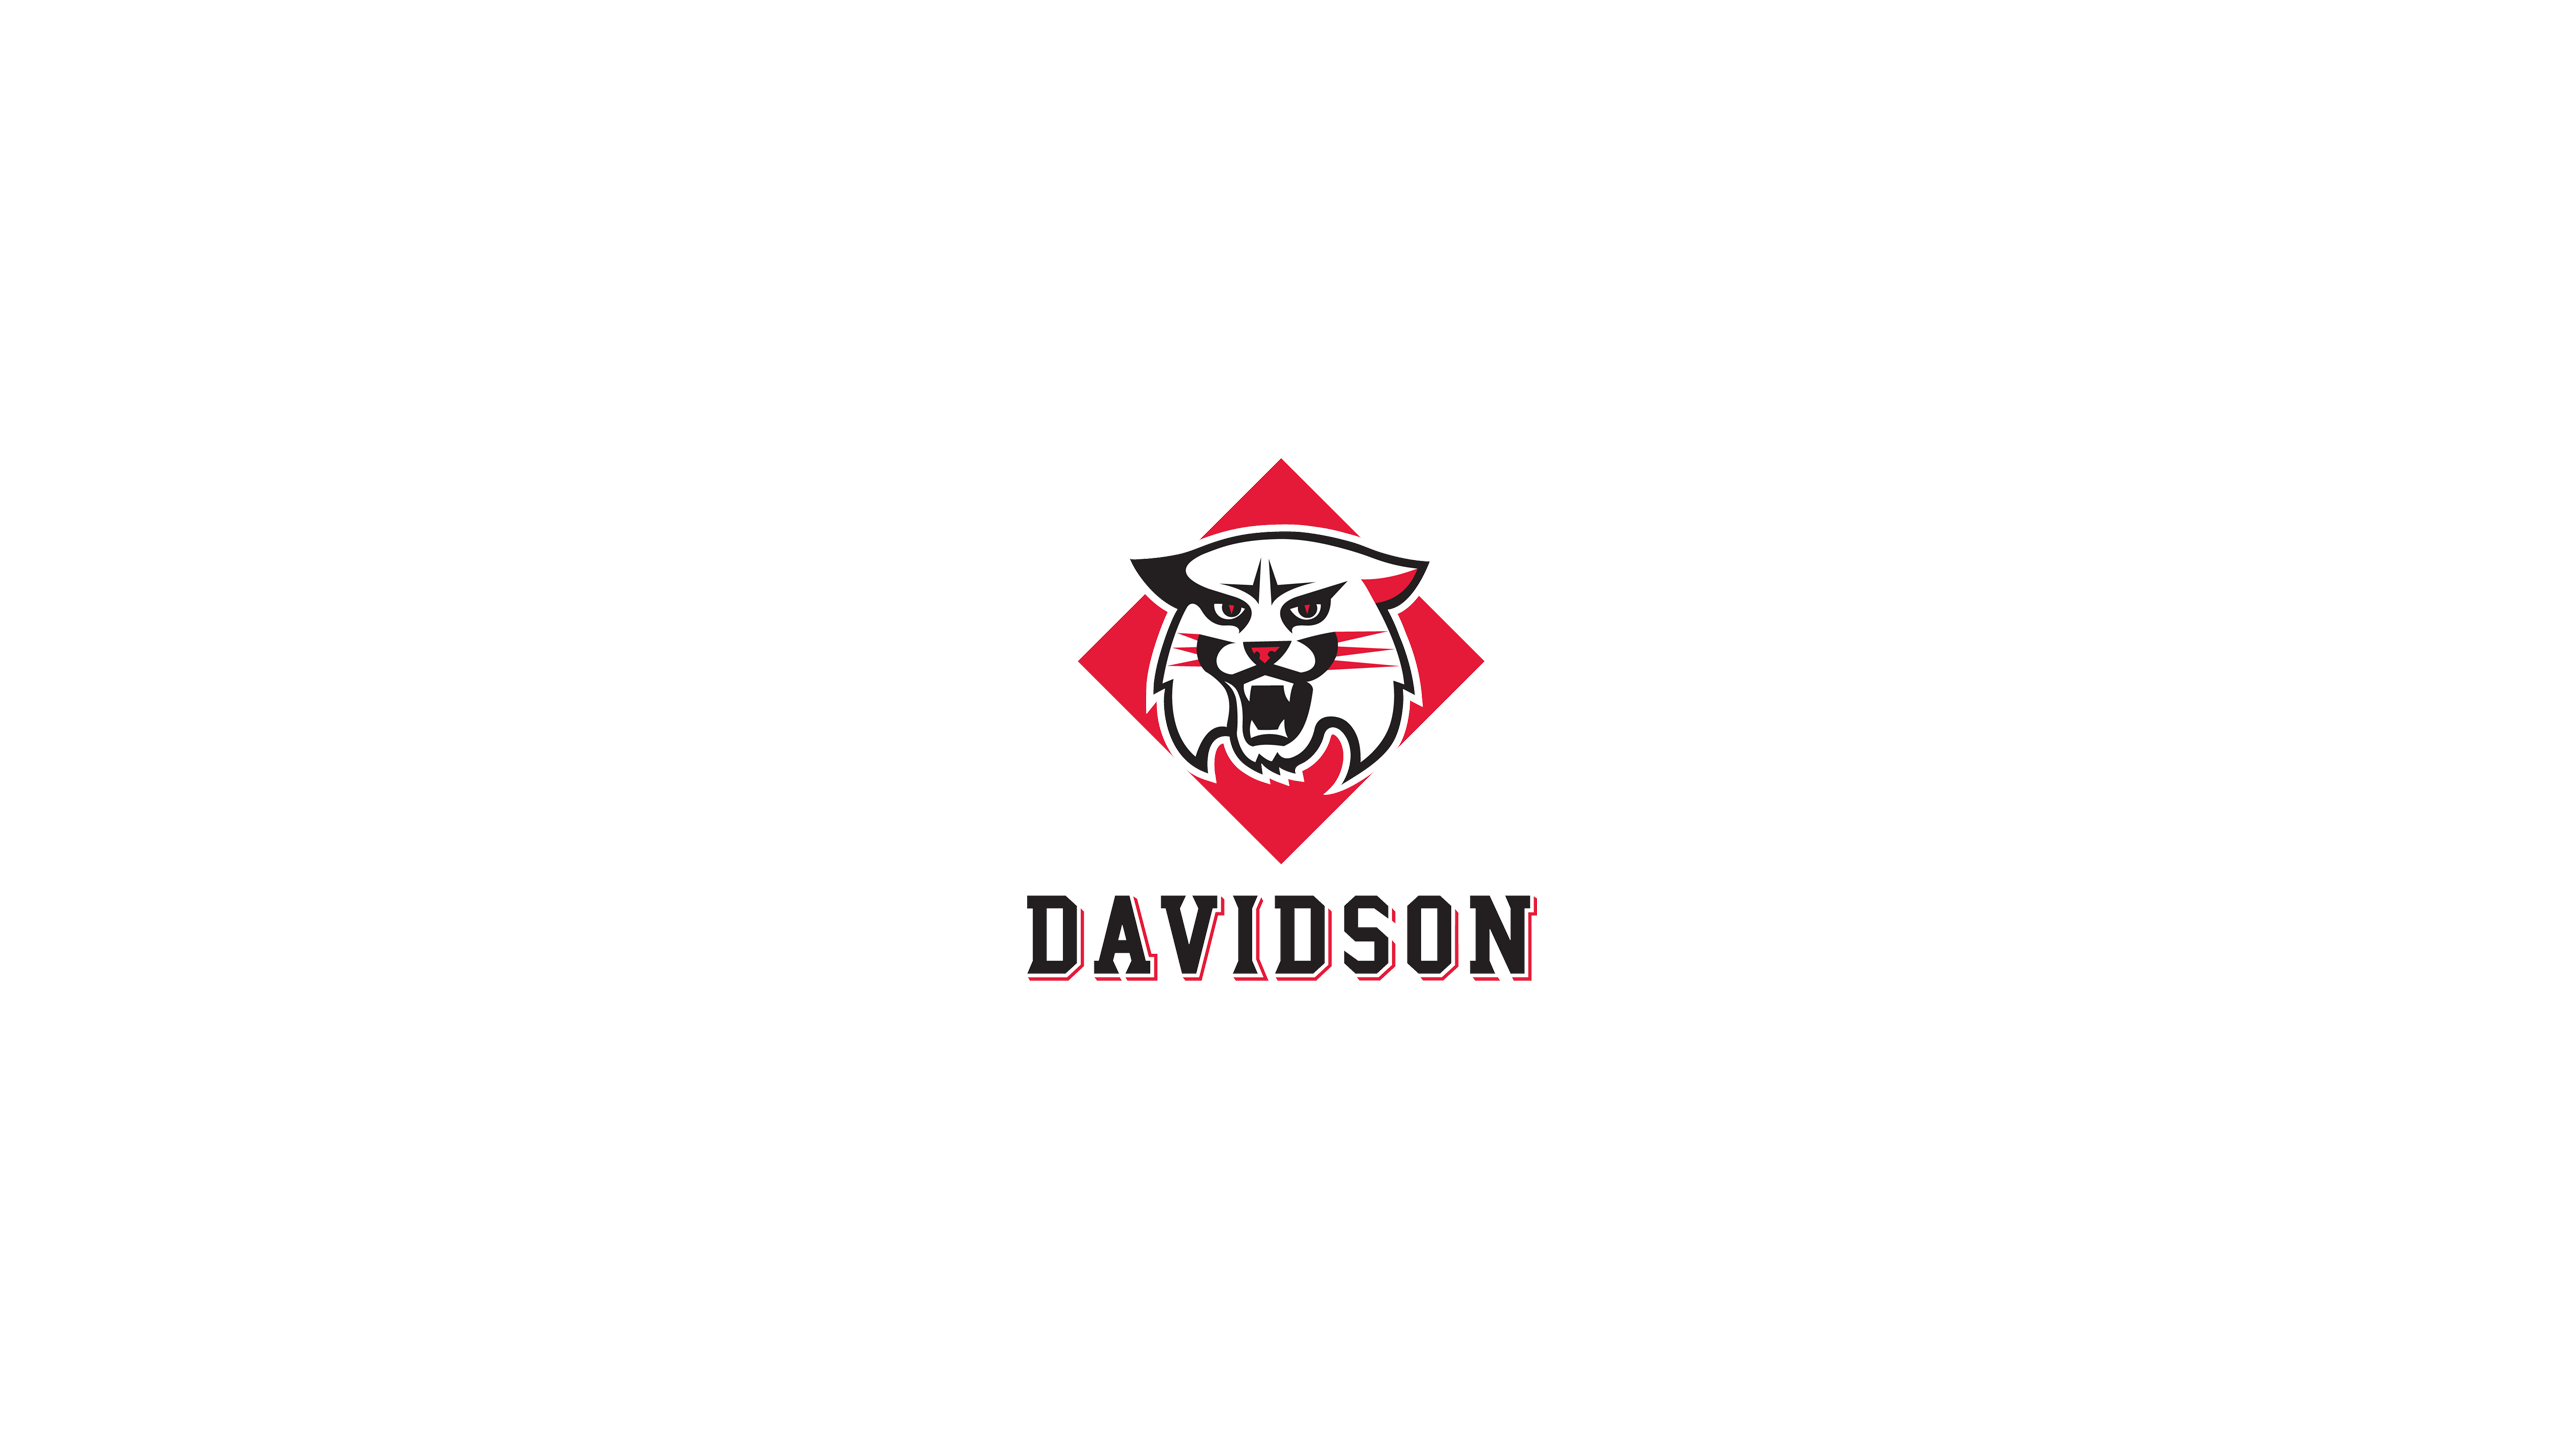 Davidson Wildcats Basketball - NCAAB - Square Bettor